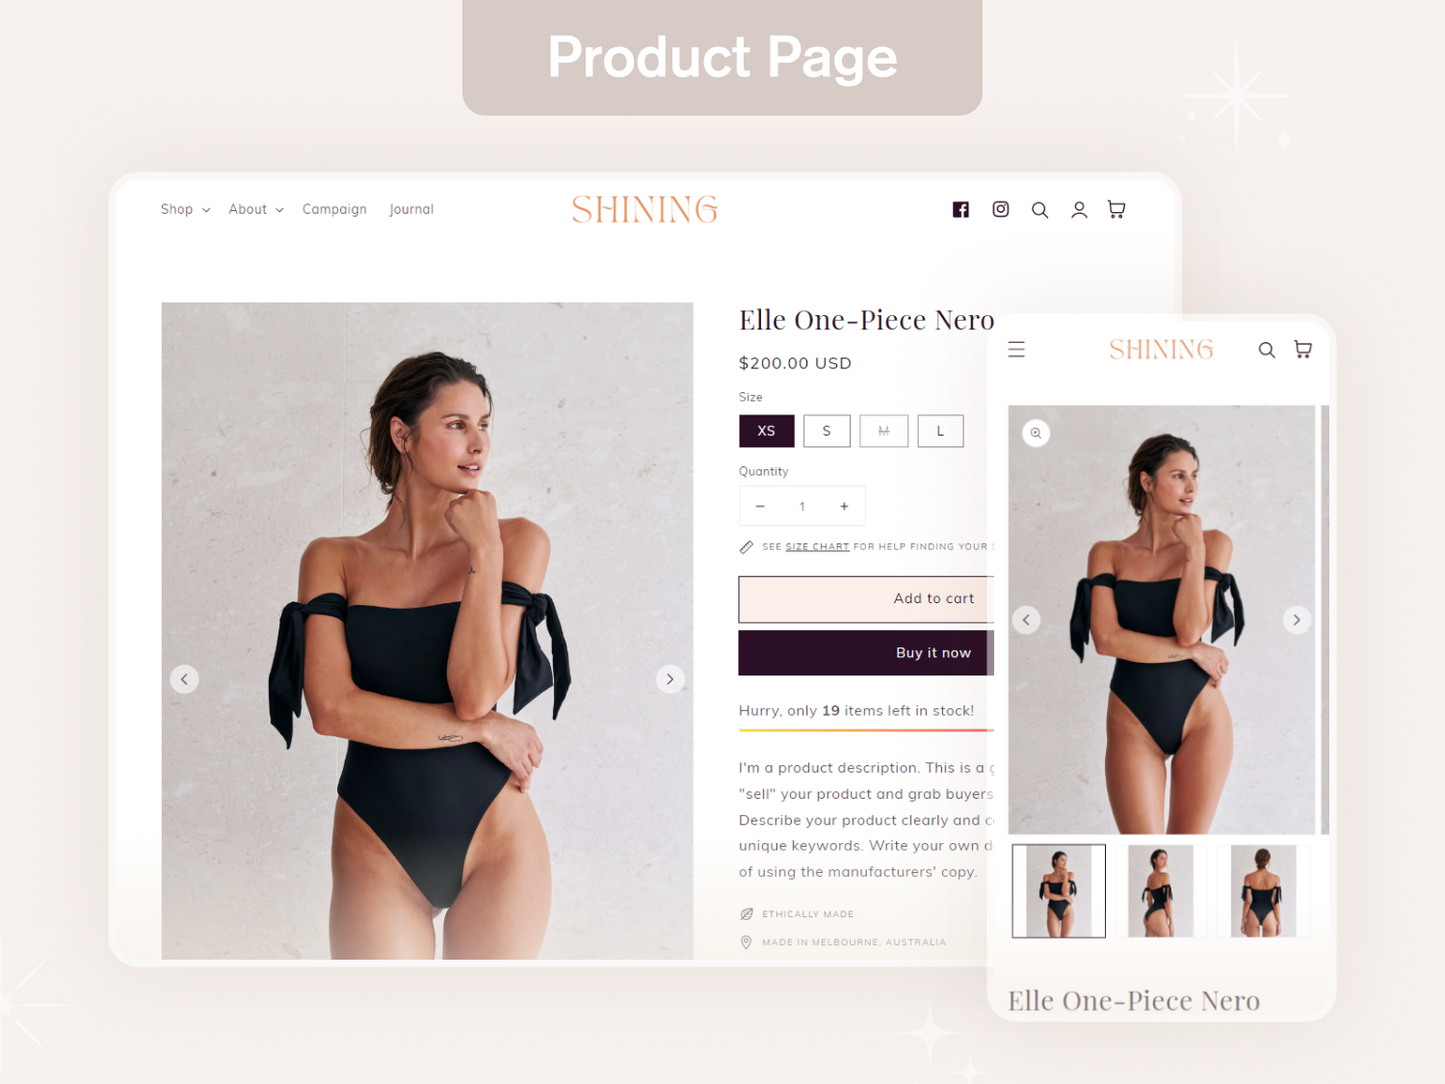 Shining - Swimsuits & Clothing for Women Shopify Theme